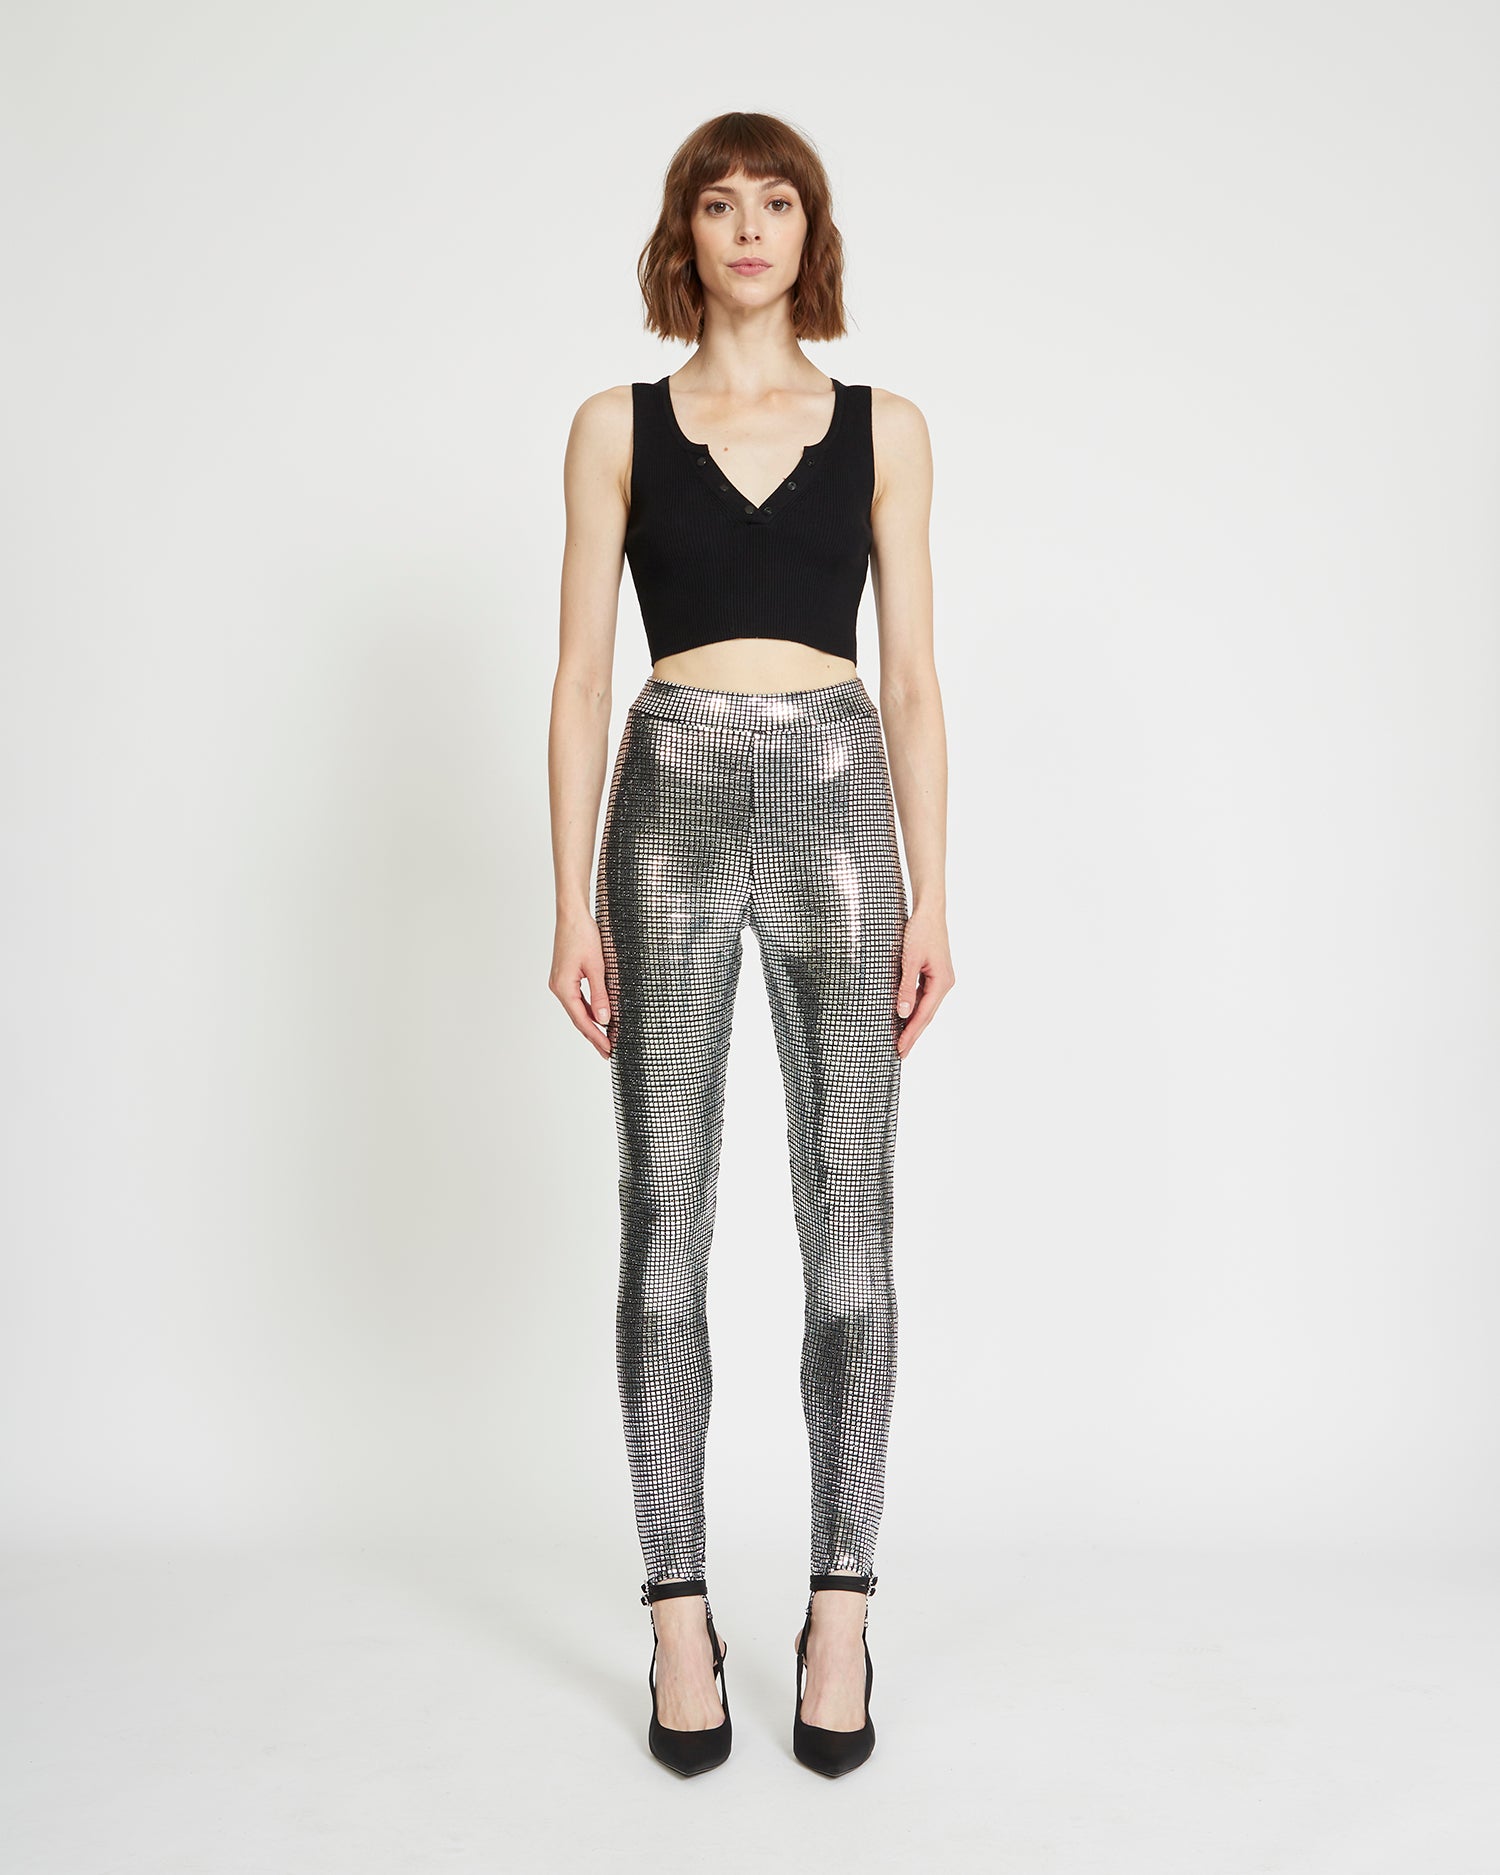 High-waist metallic leggings